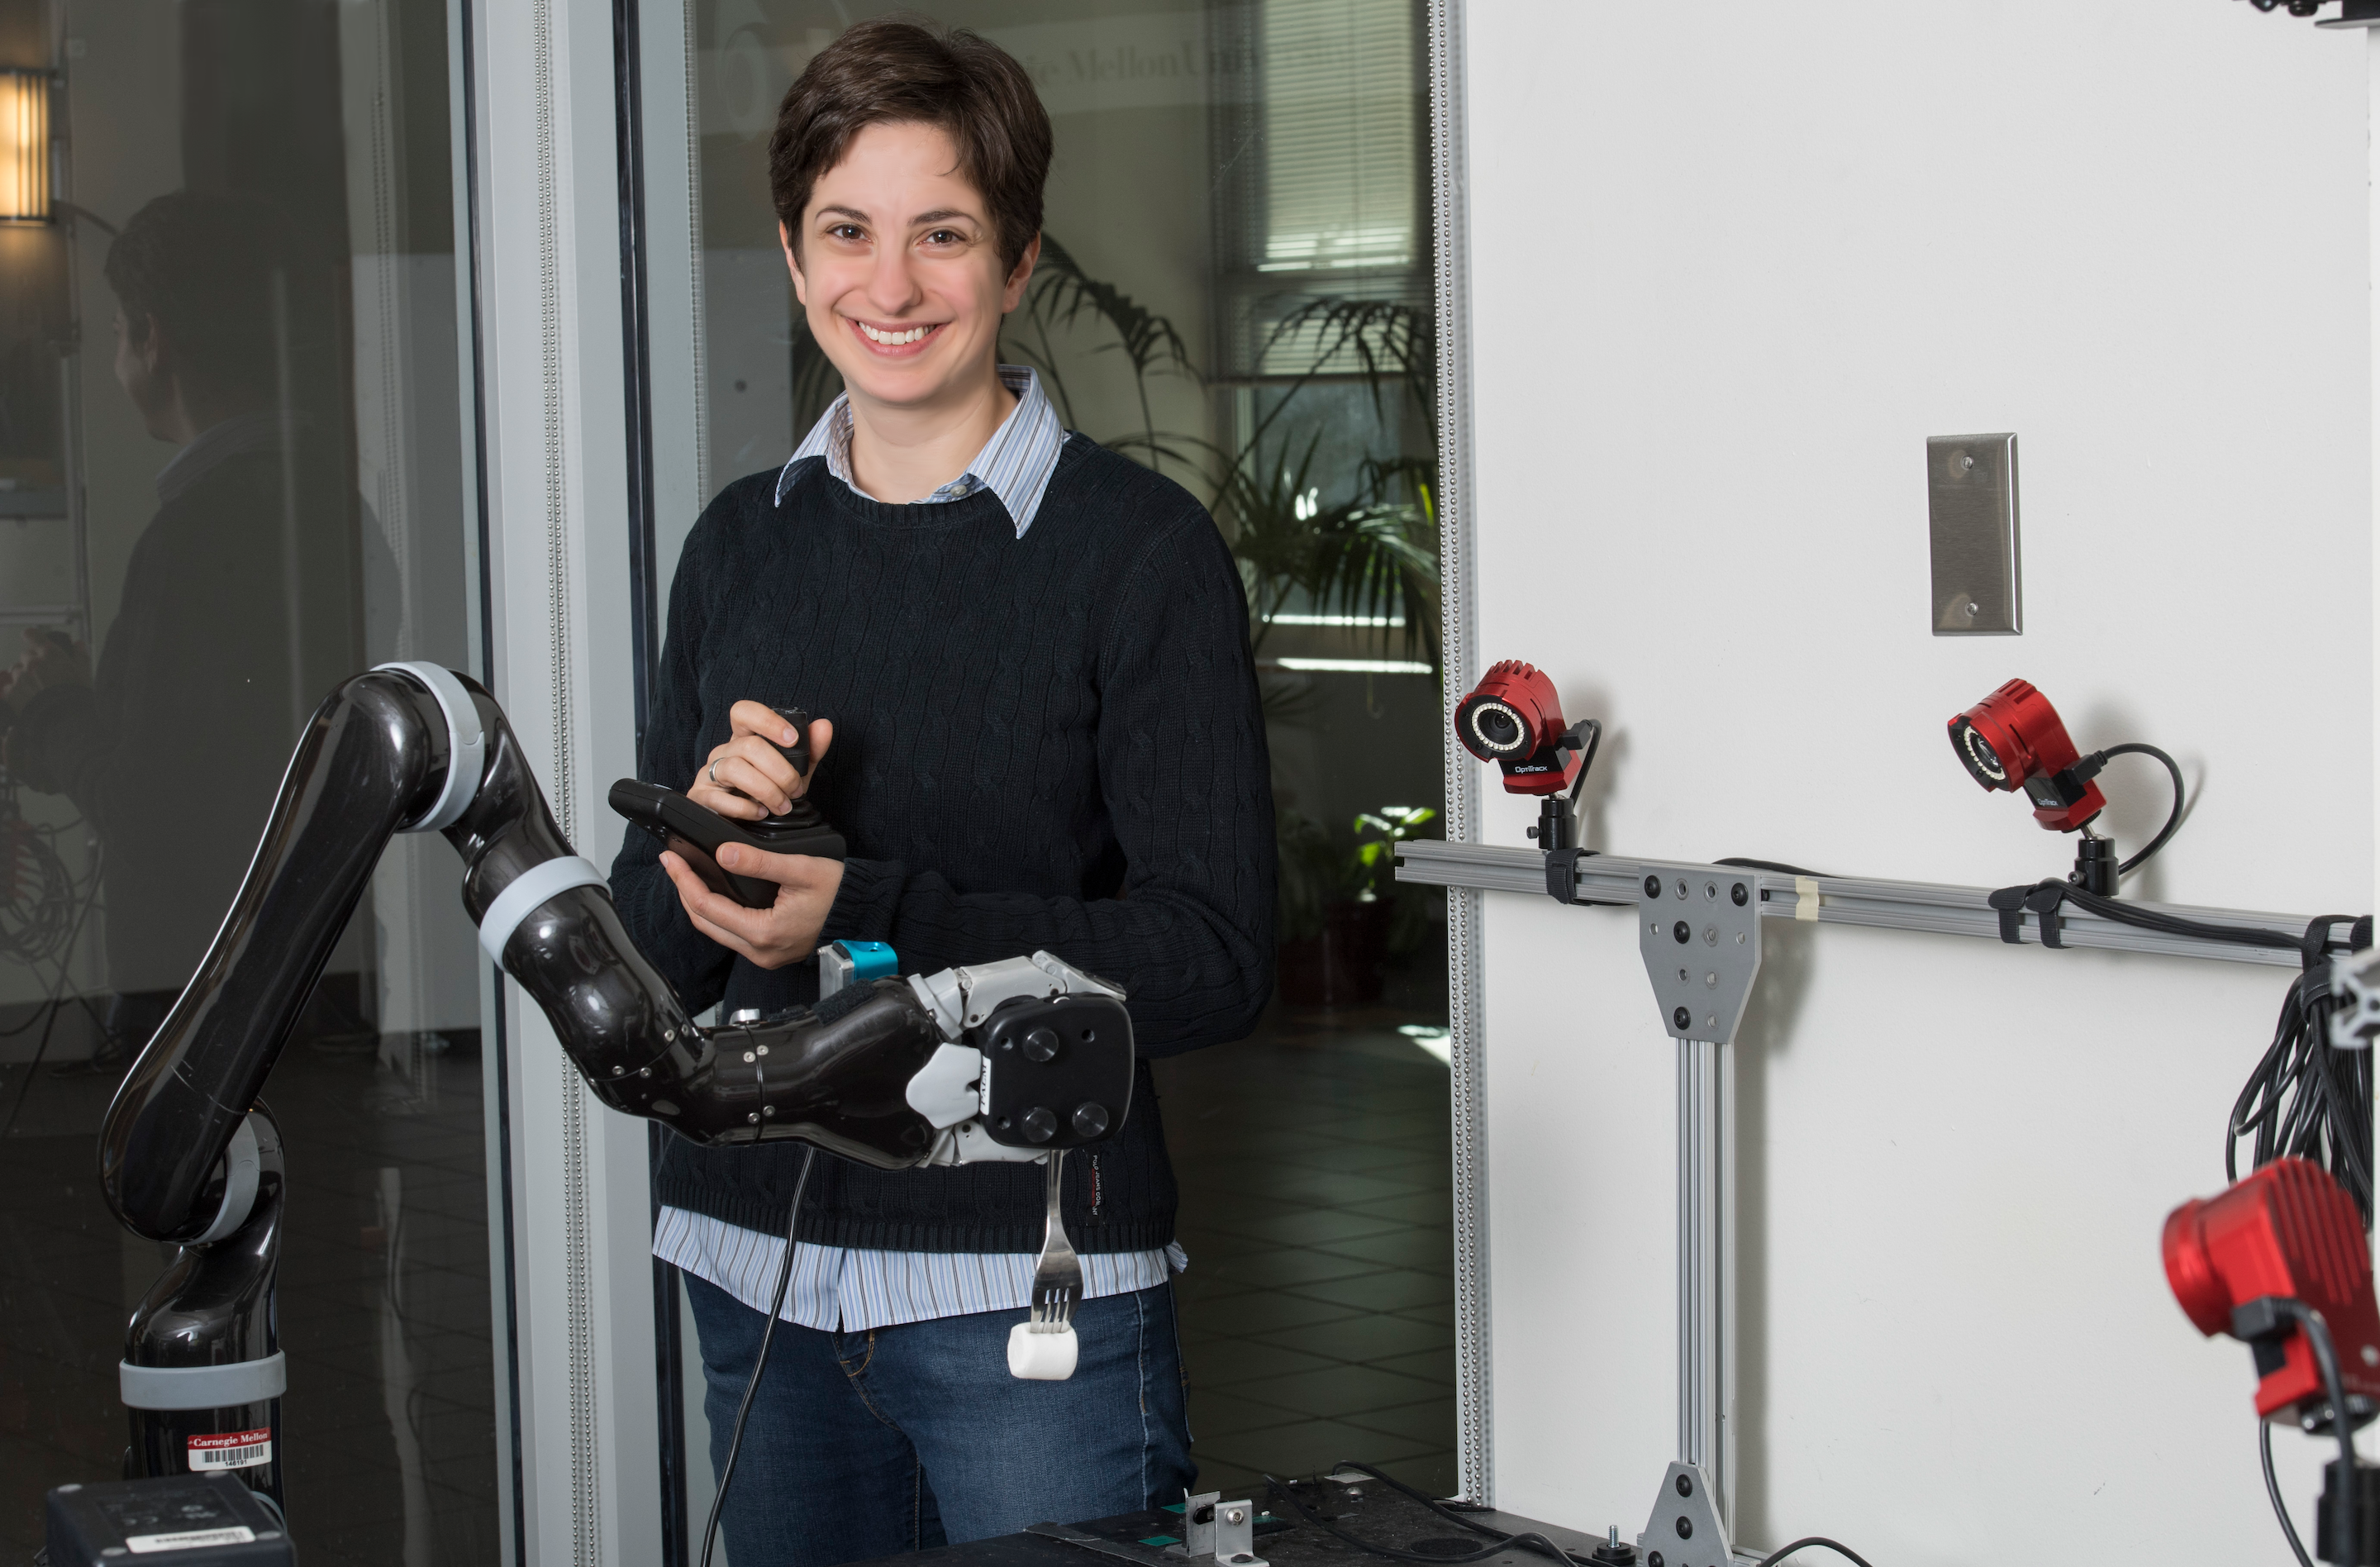 Professor Admoni holding a joystick next to a black robot arm